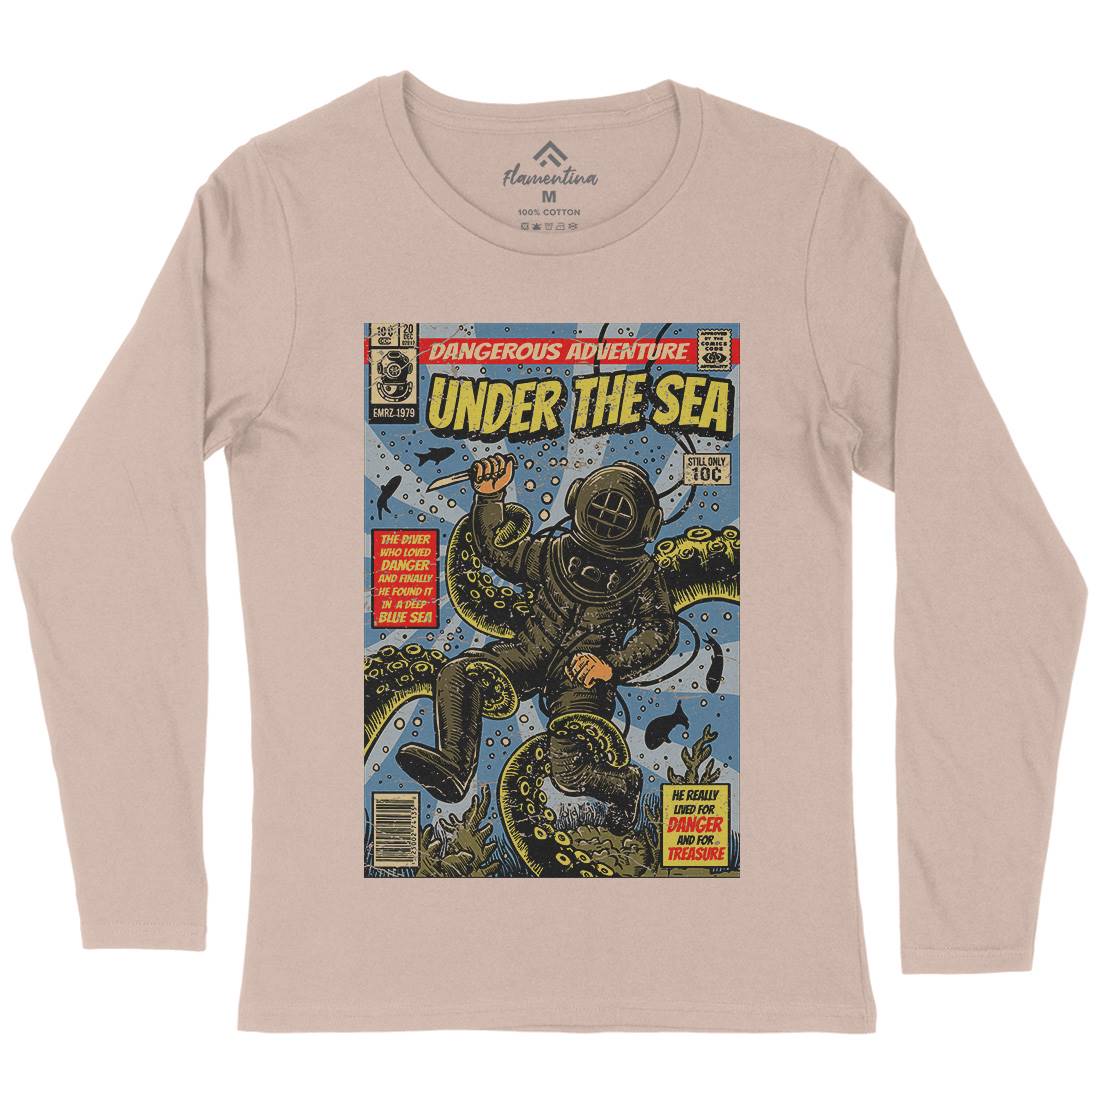 Under The Sea Womens Long Sleeve T-Shirt Navy A585